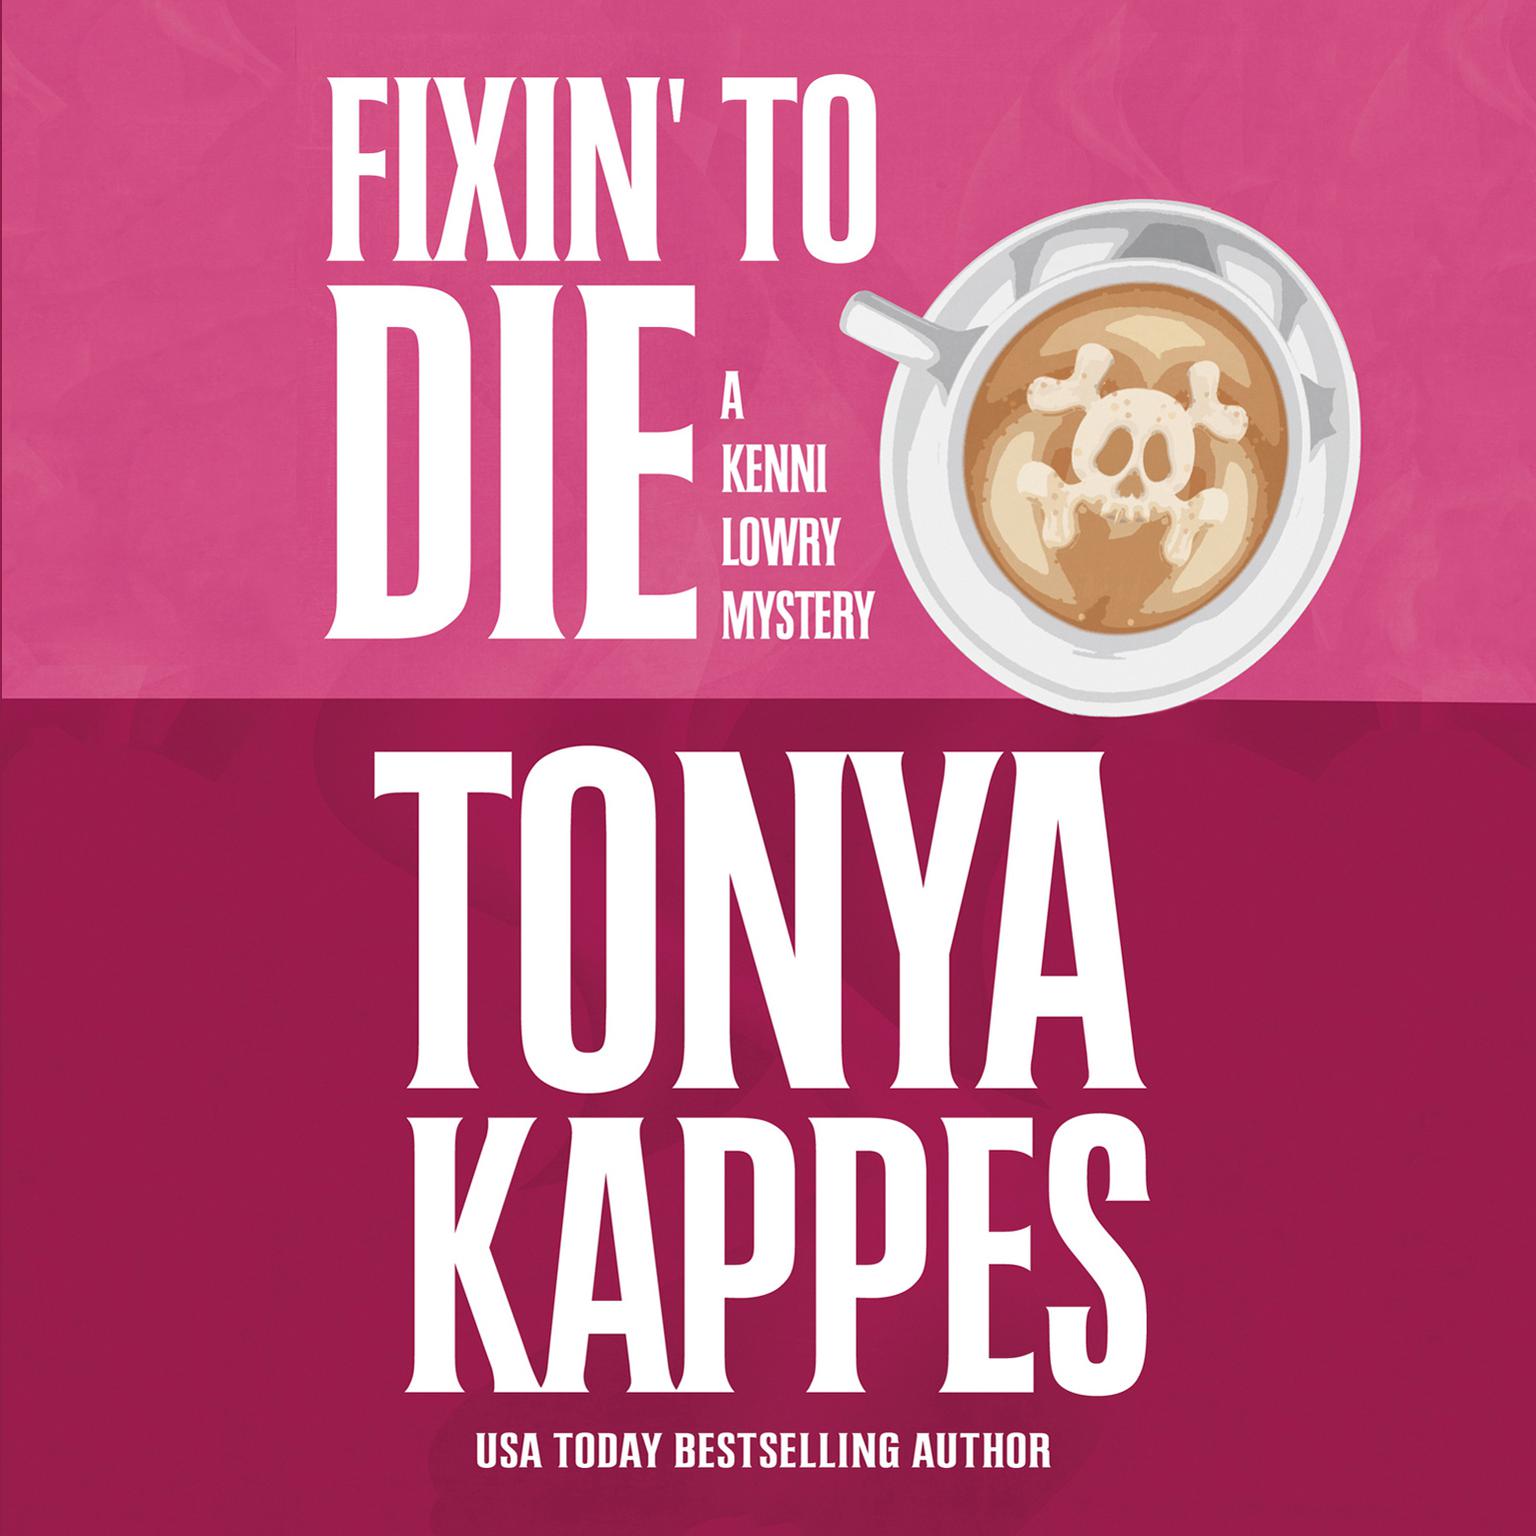 Fixin To Die Audiobook, by Tonya Kappes